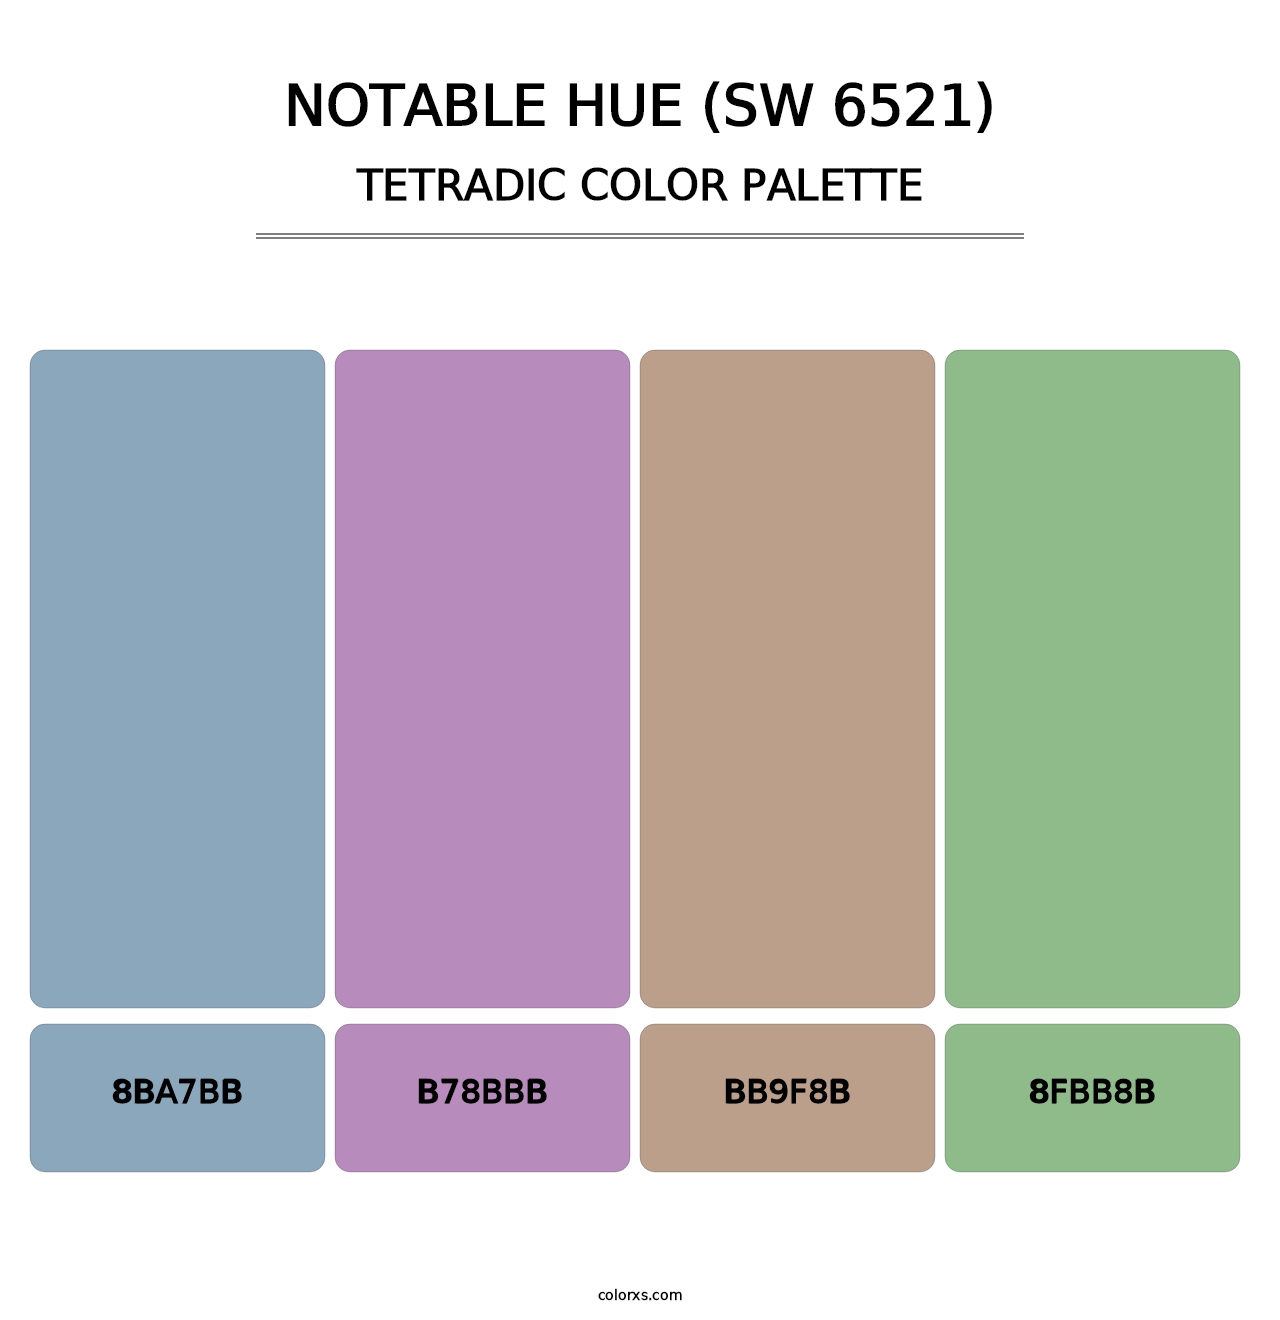 Notable Hue (SW 6521) - Tetradic Color Palette